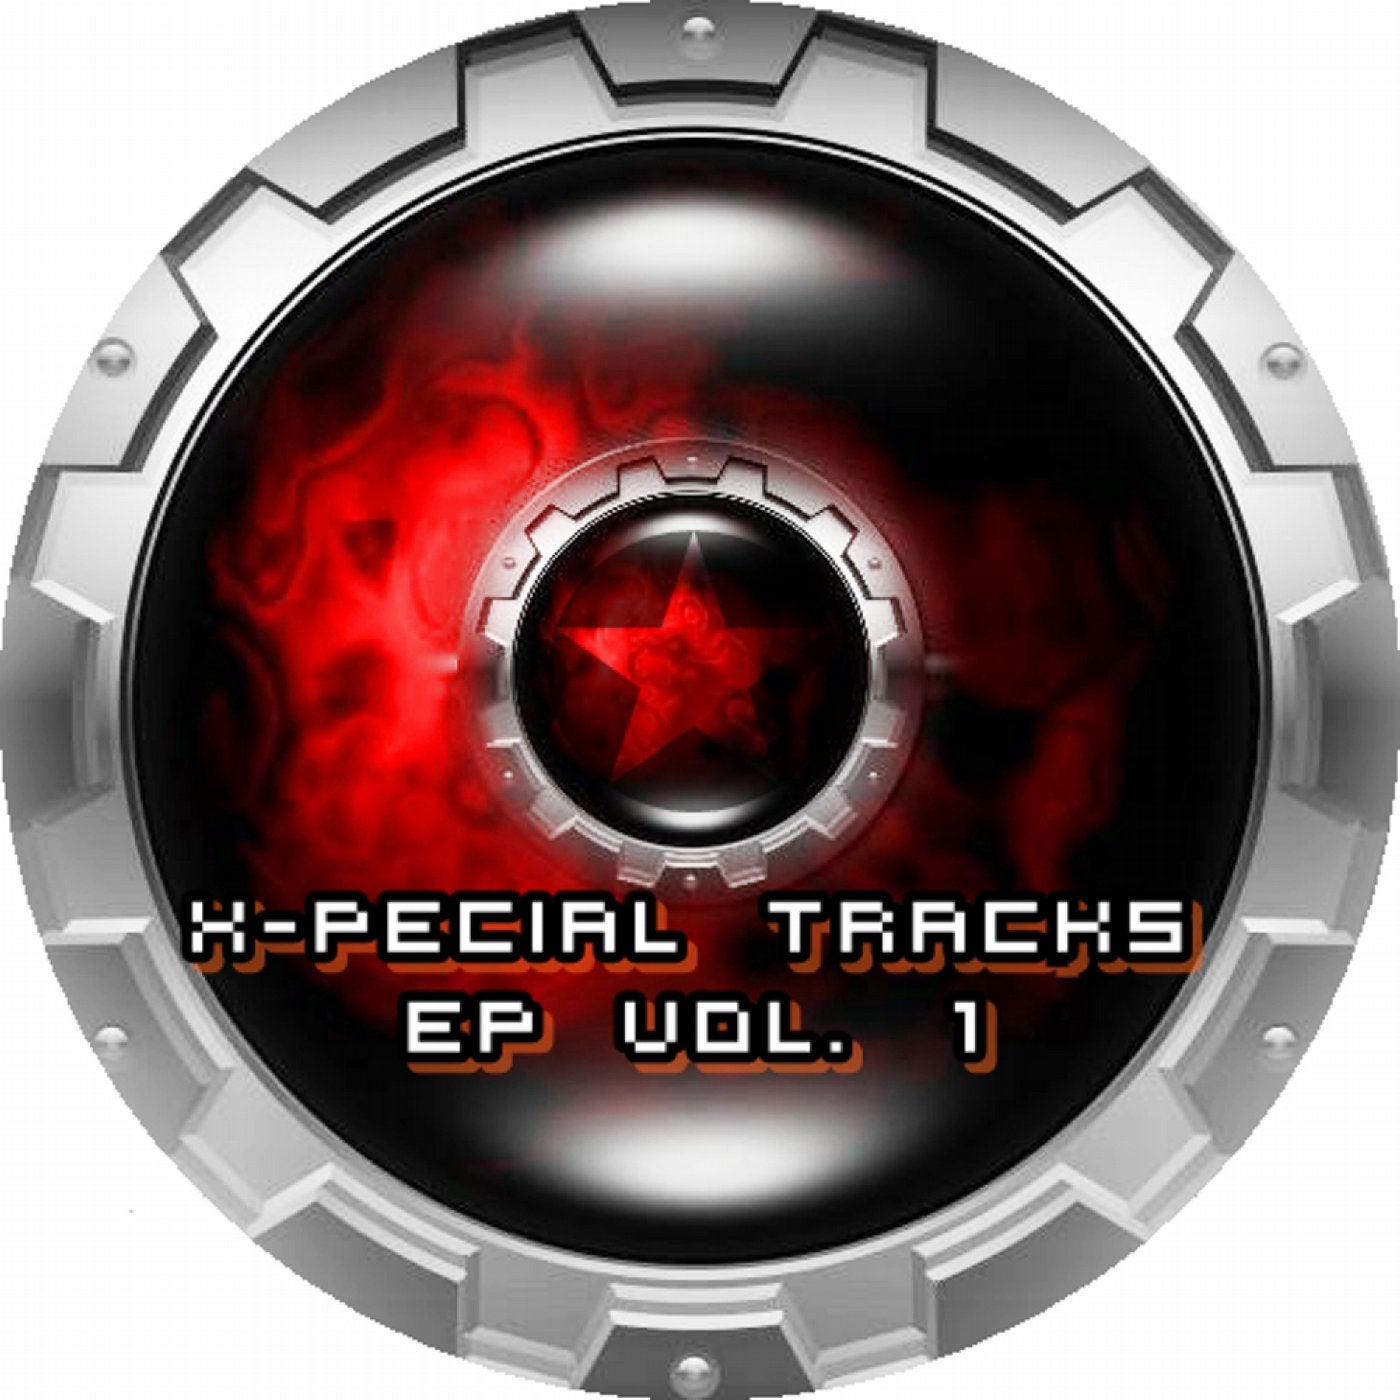 X-PECIAL TRACKS EP, VOL. 1